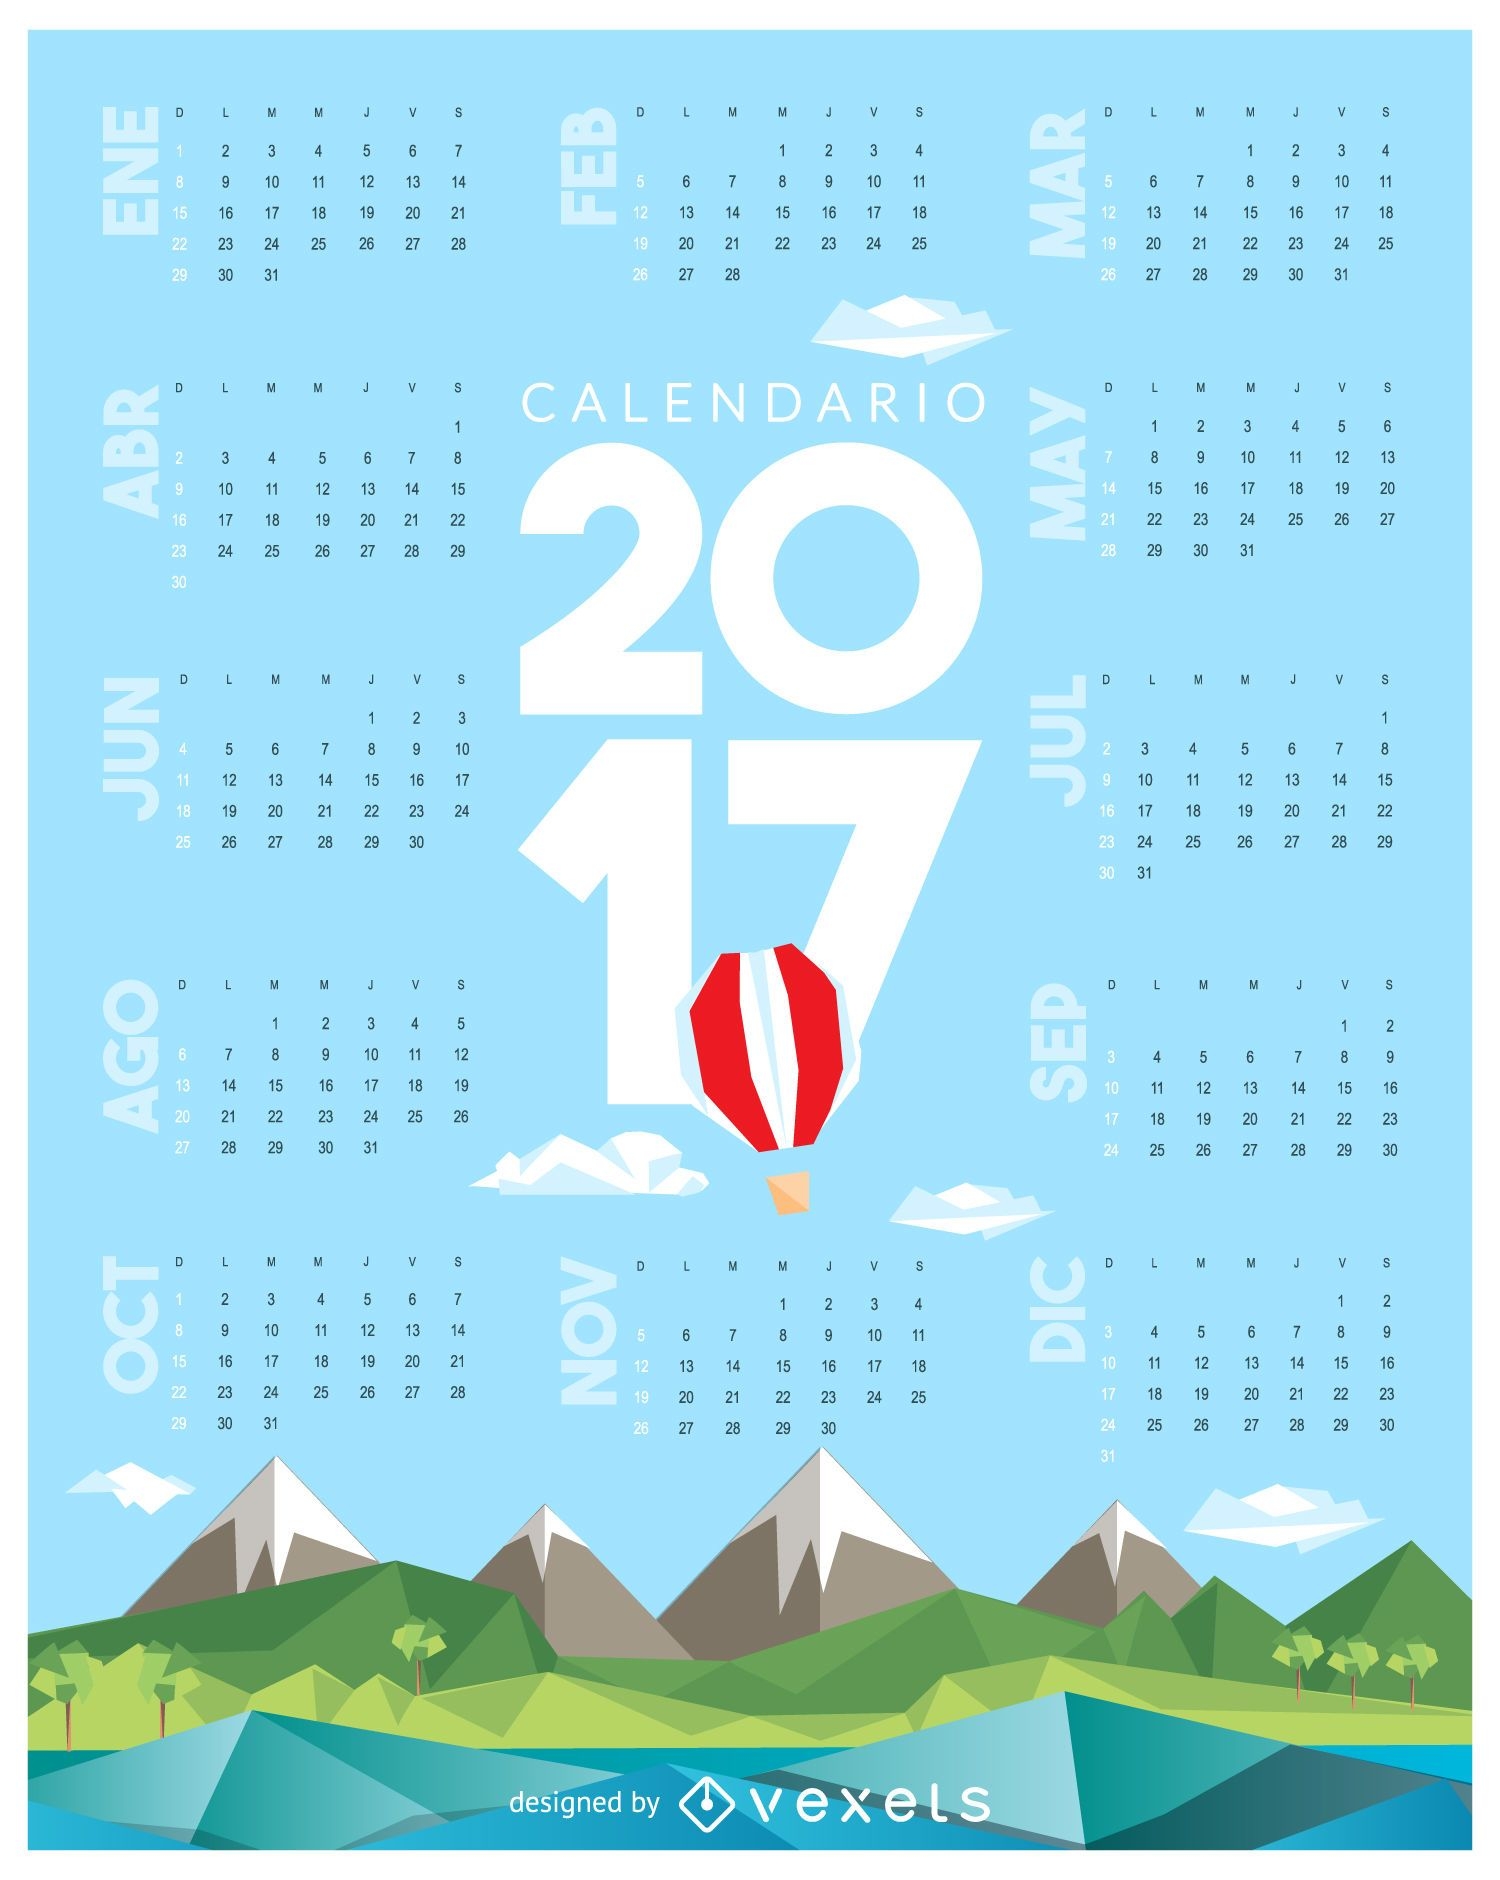 Calendario 2017 low poly en español